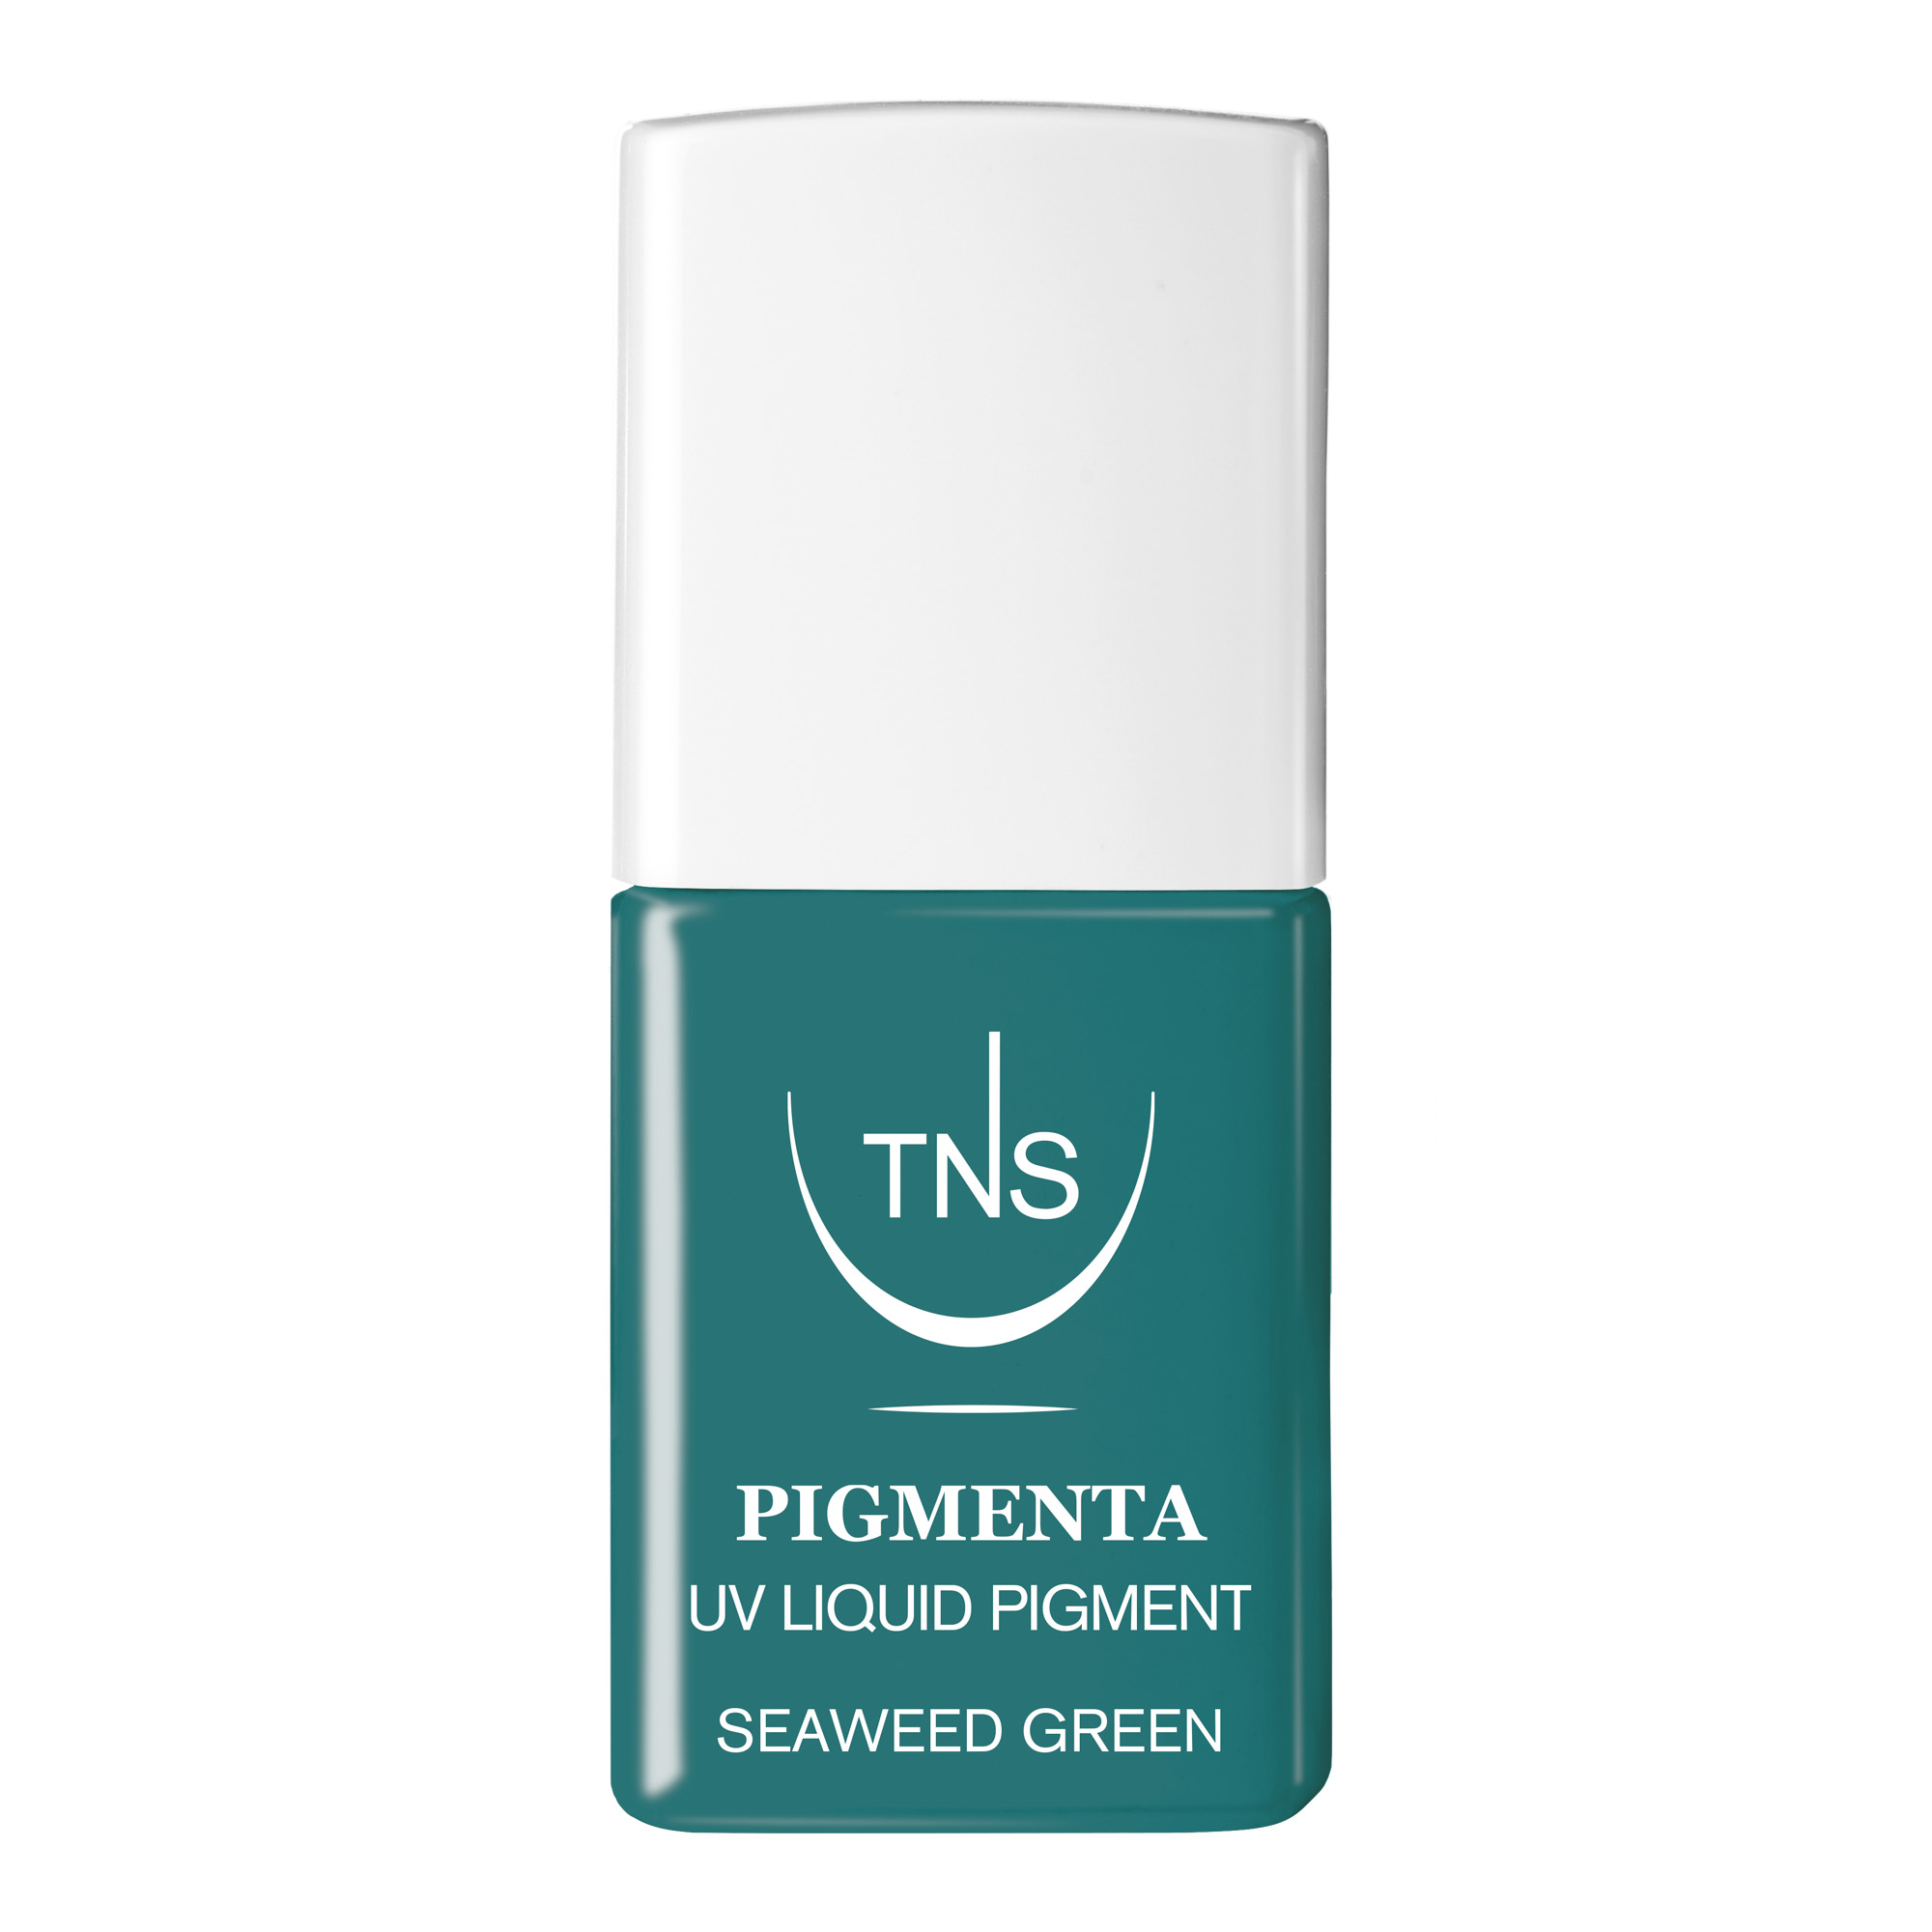 Pigmento Liquido UV Seaweed Green verde smeraldo scuro 10 ml Pigmenta TNS